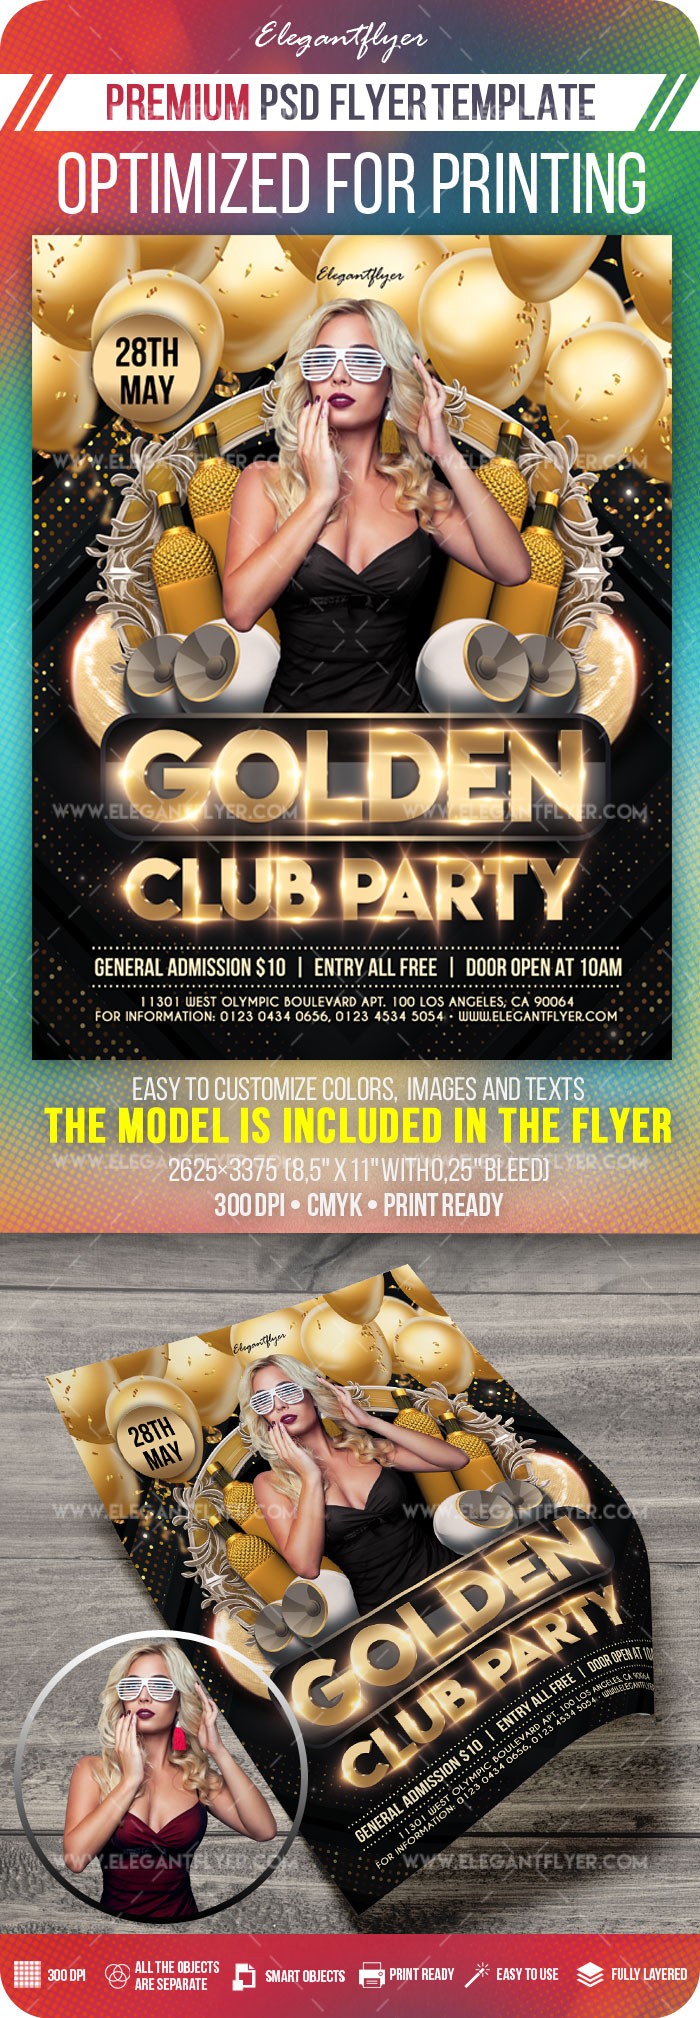 Golden Club Party by ElegantFlyer